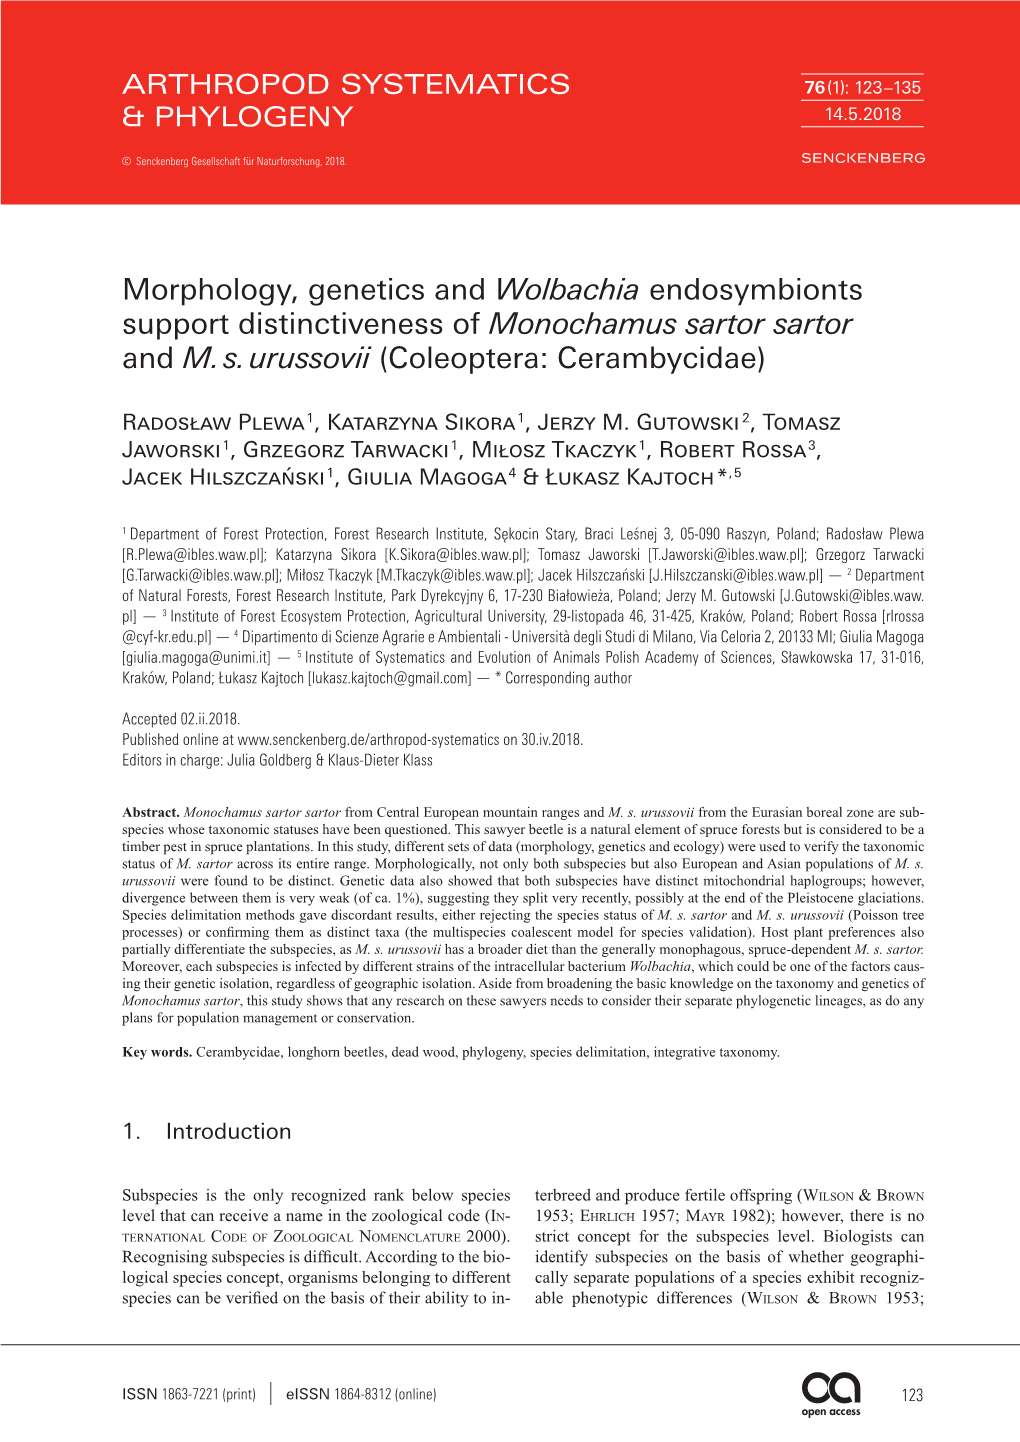 Morphology, Genetics and Wolbachia Endosymbionts Support Distinctiveness of Monochamus Sartor Sartor and M. S. Urussovii (Coleoptera: Cerambycidae)